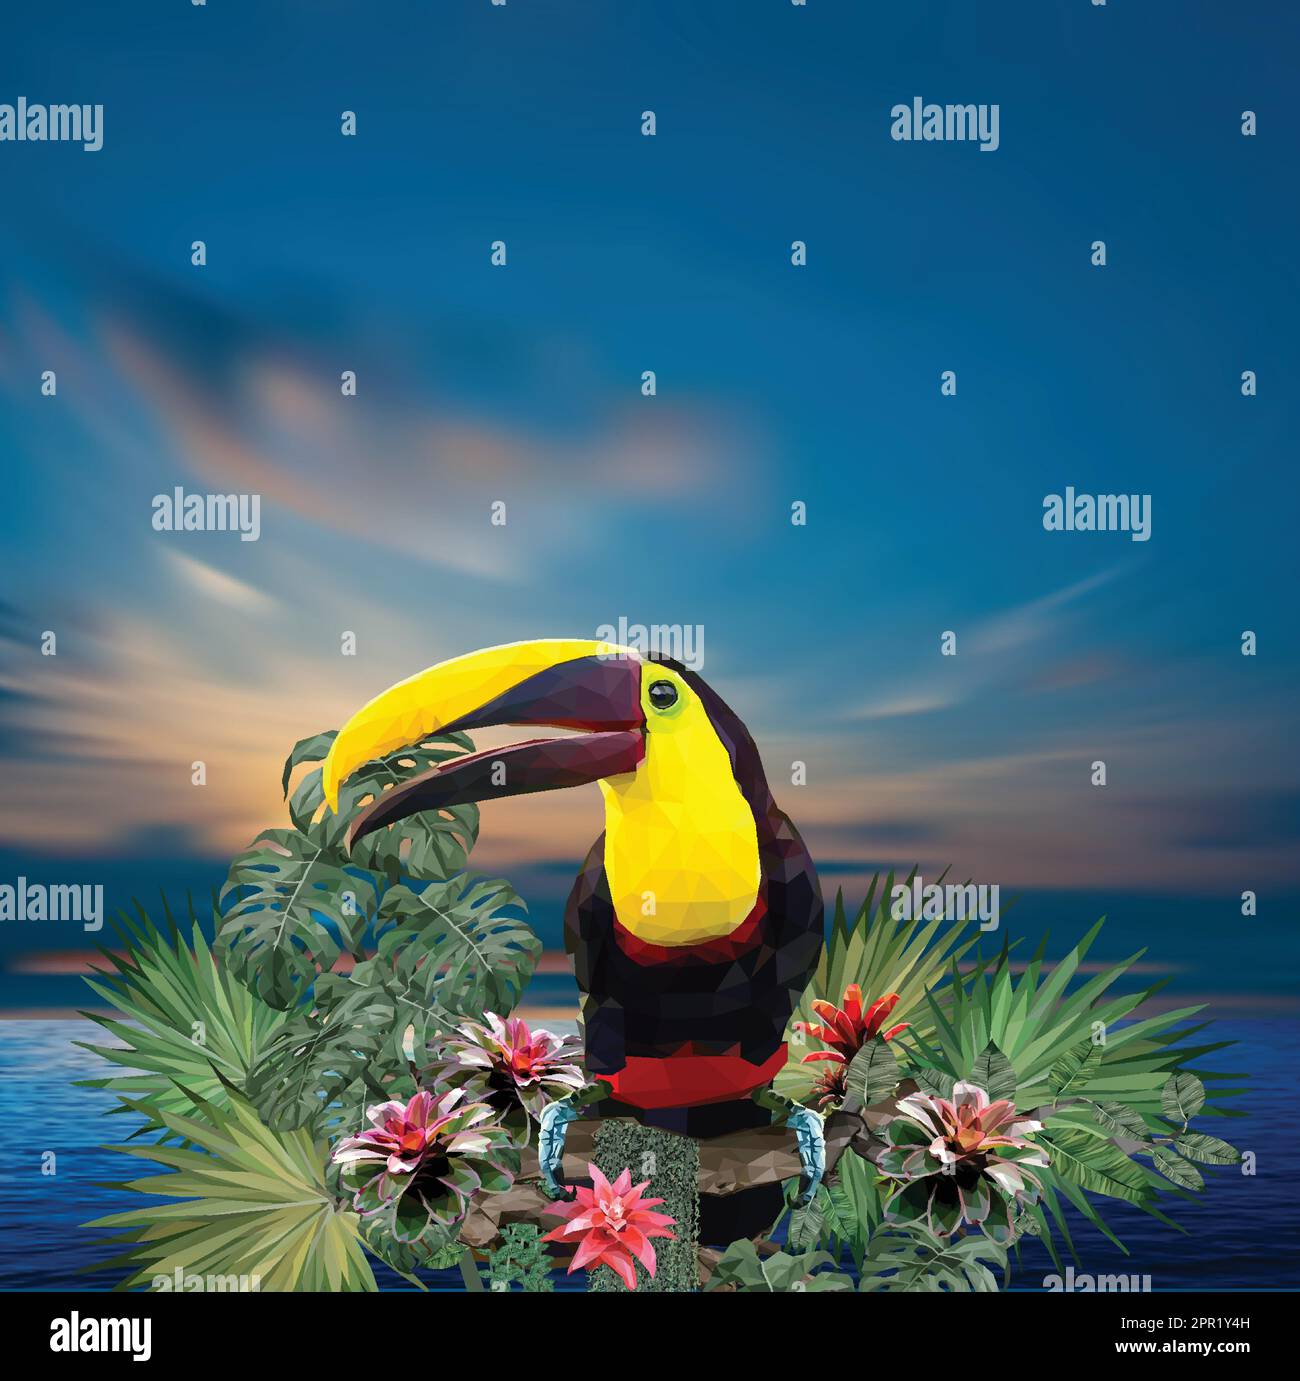 polygonal illustration toucan bird amazon forest plants Stock Vector